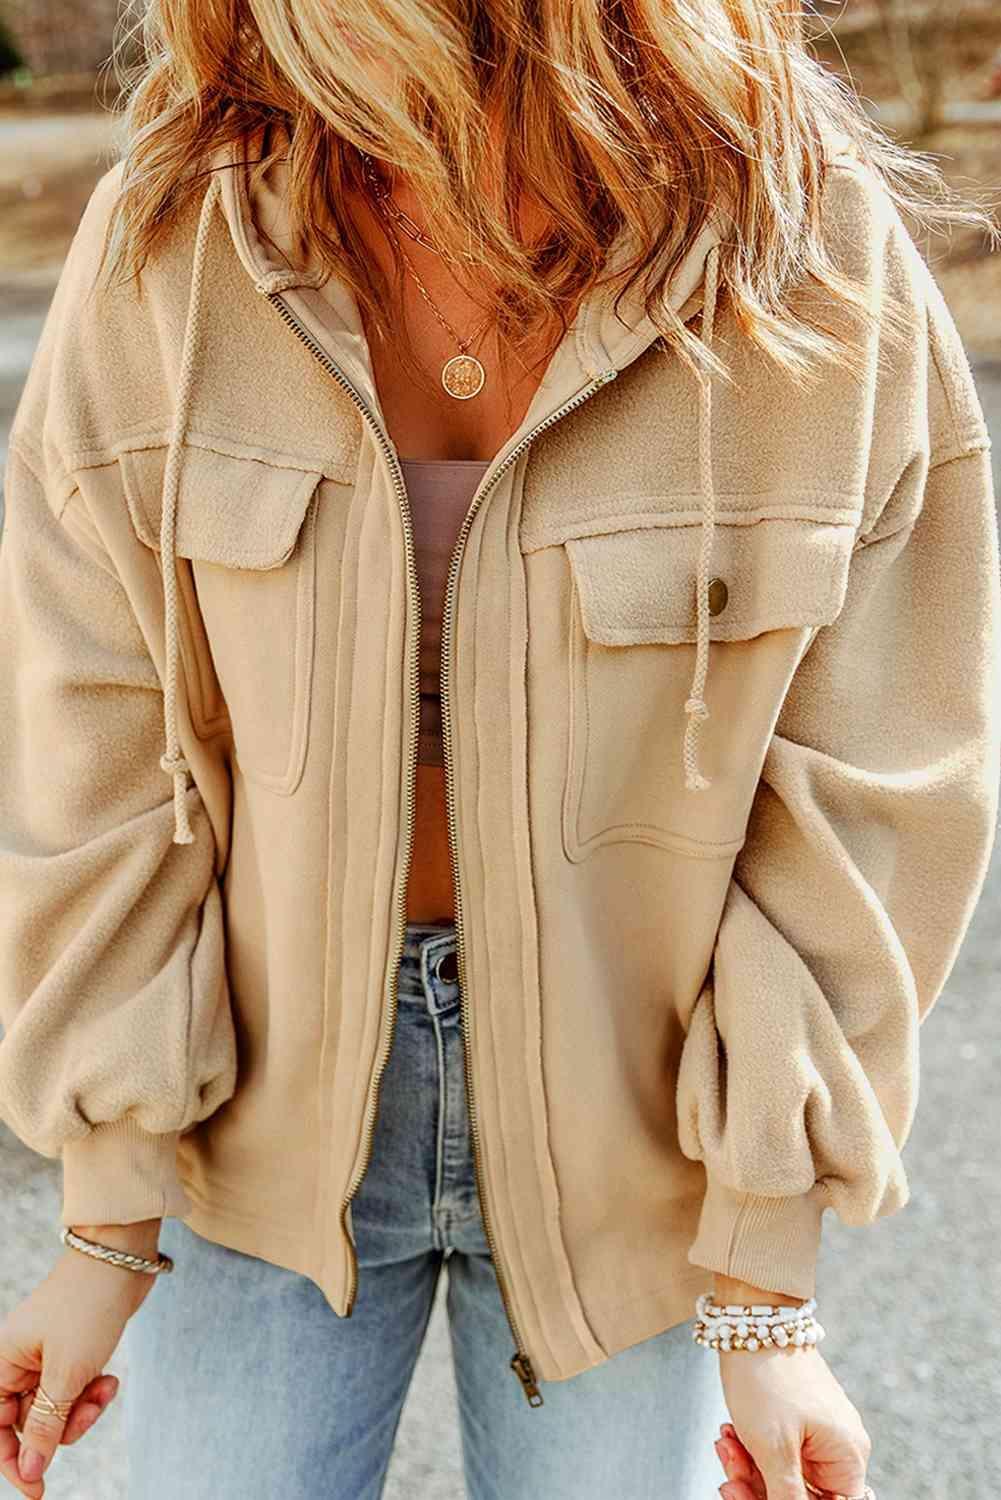 Bona Fide Fashion - Zip-Up Drawstring Hooded Jacket - Women Fashion - Bona Fide Fashion